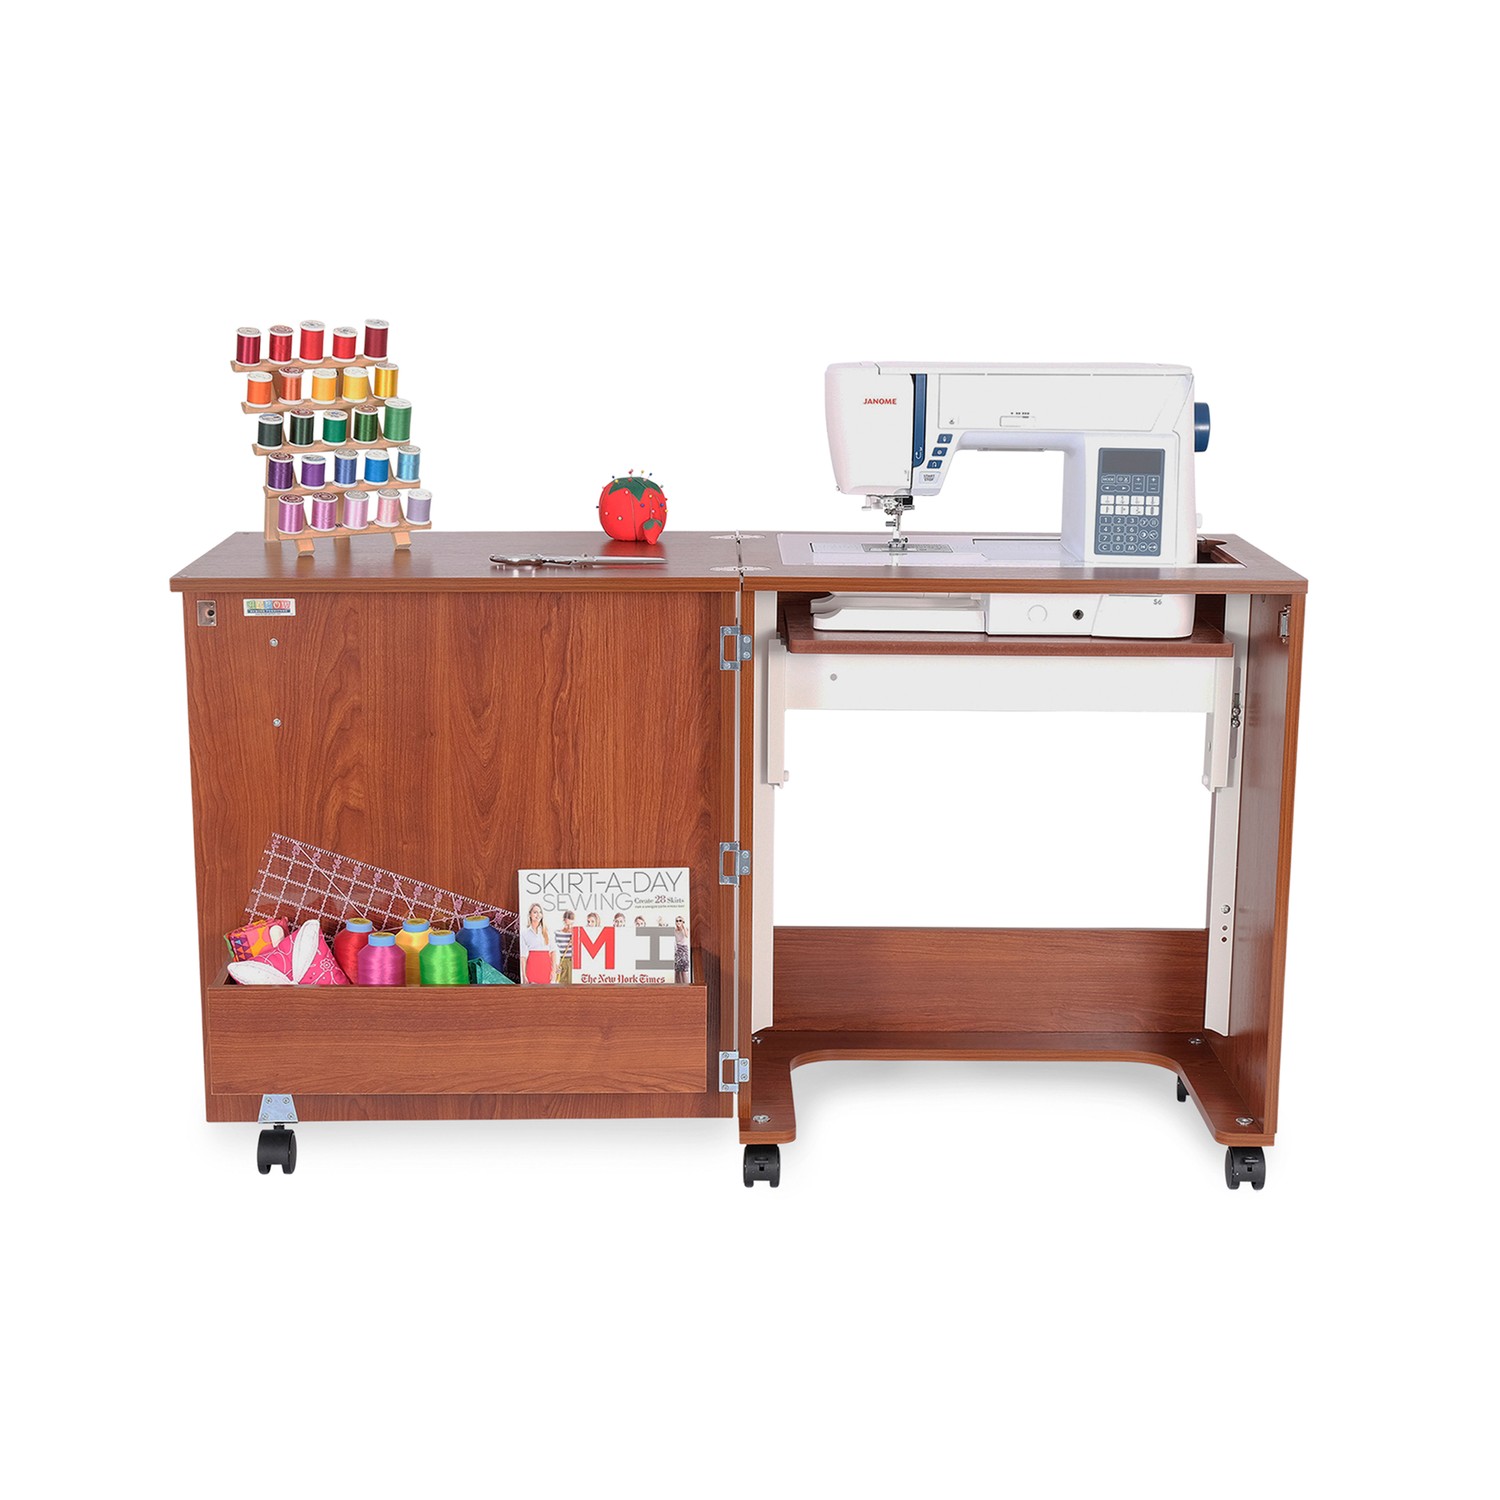 Judy Sewing Cabinet - Teak